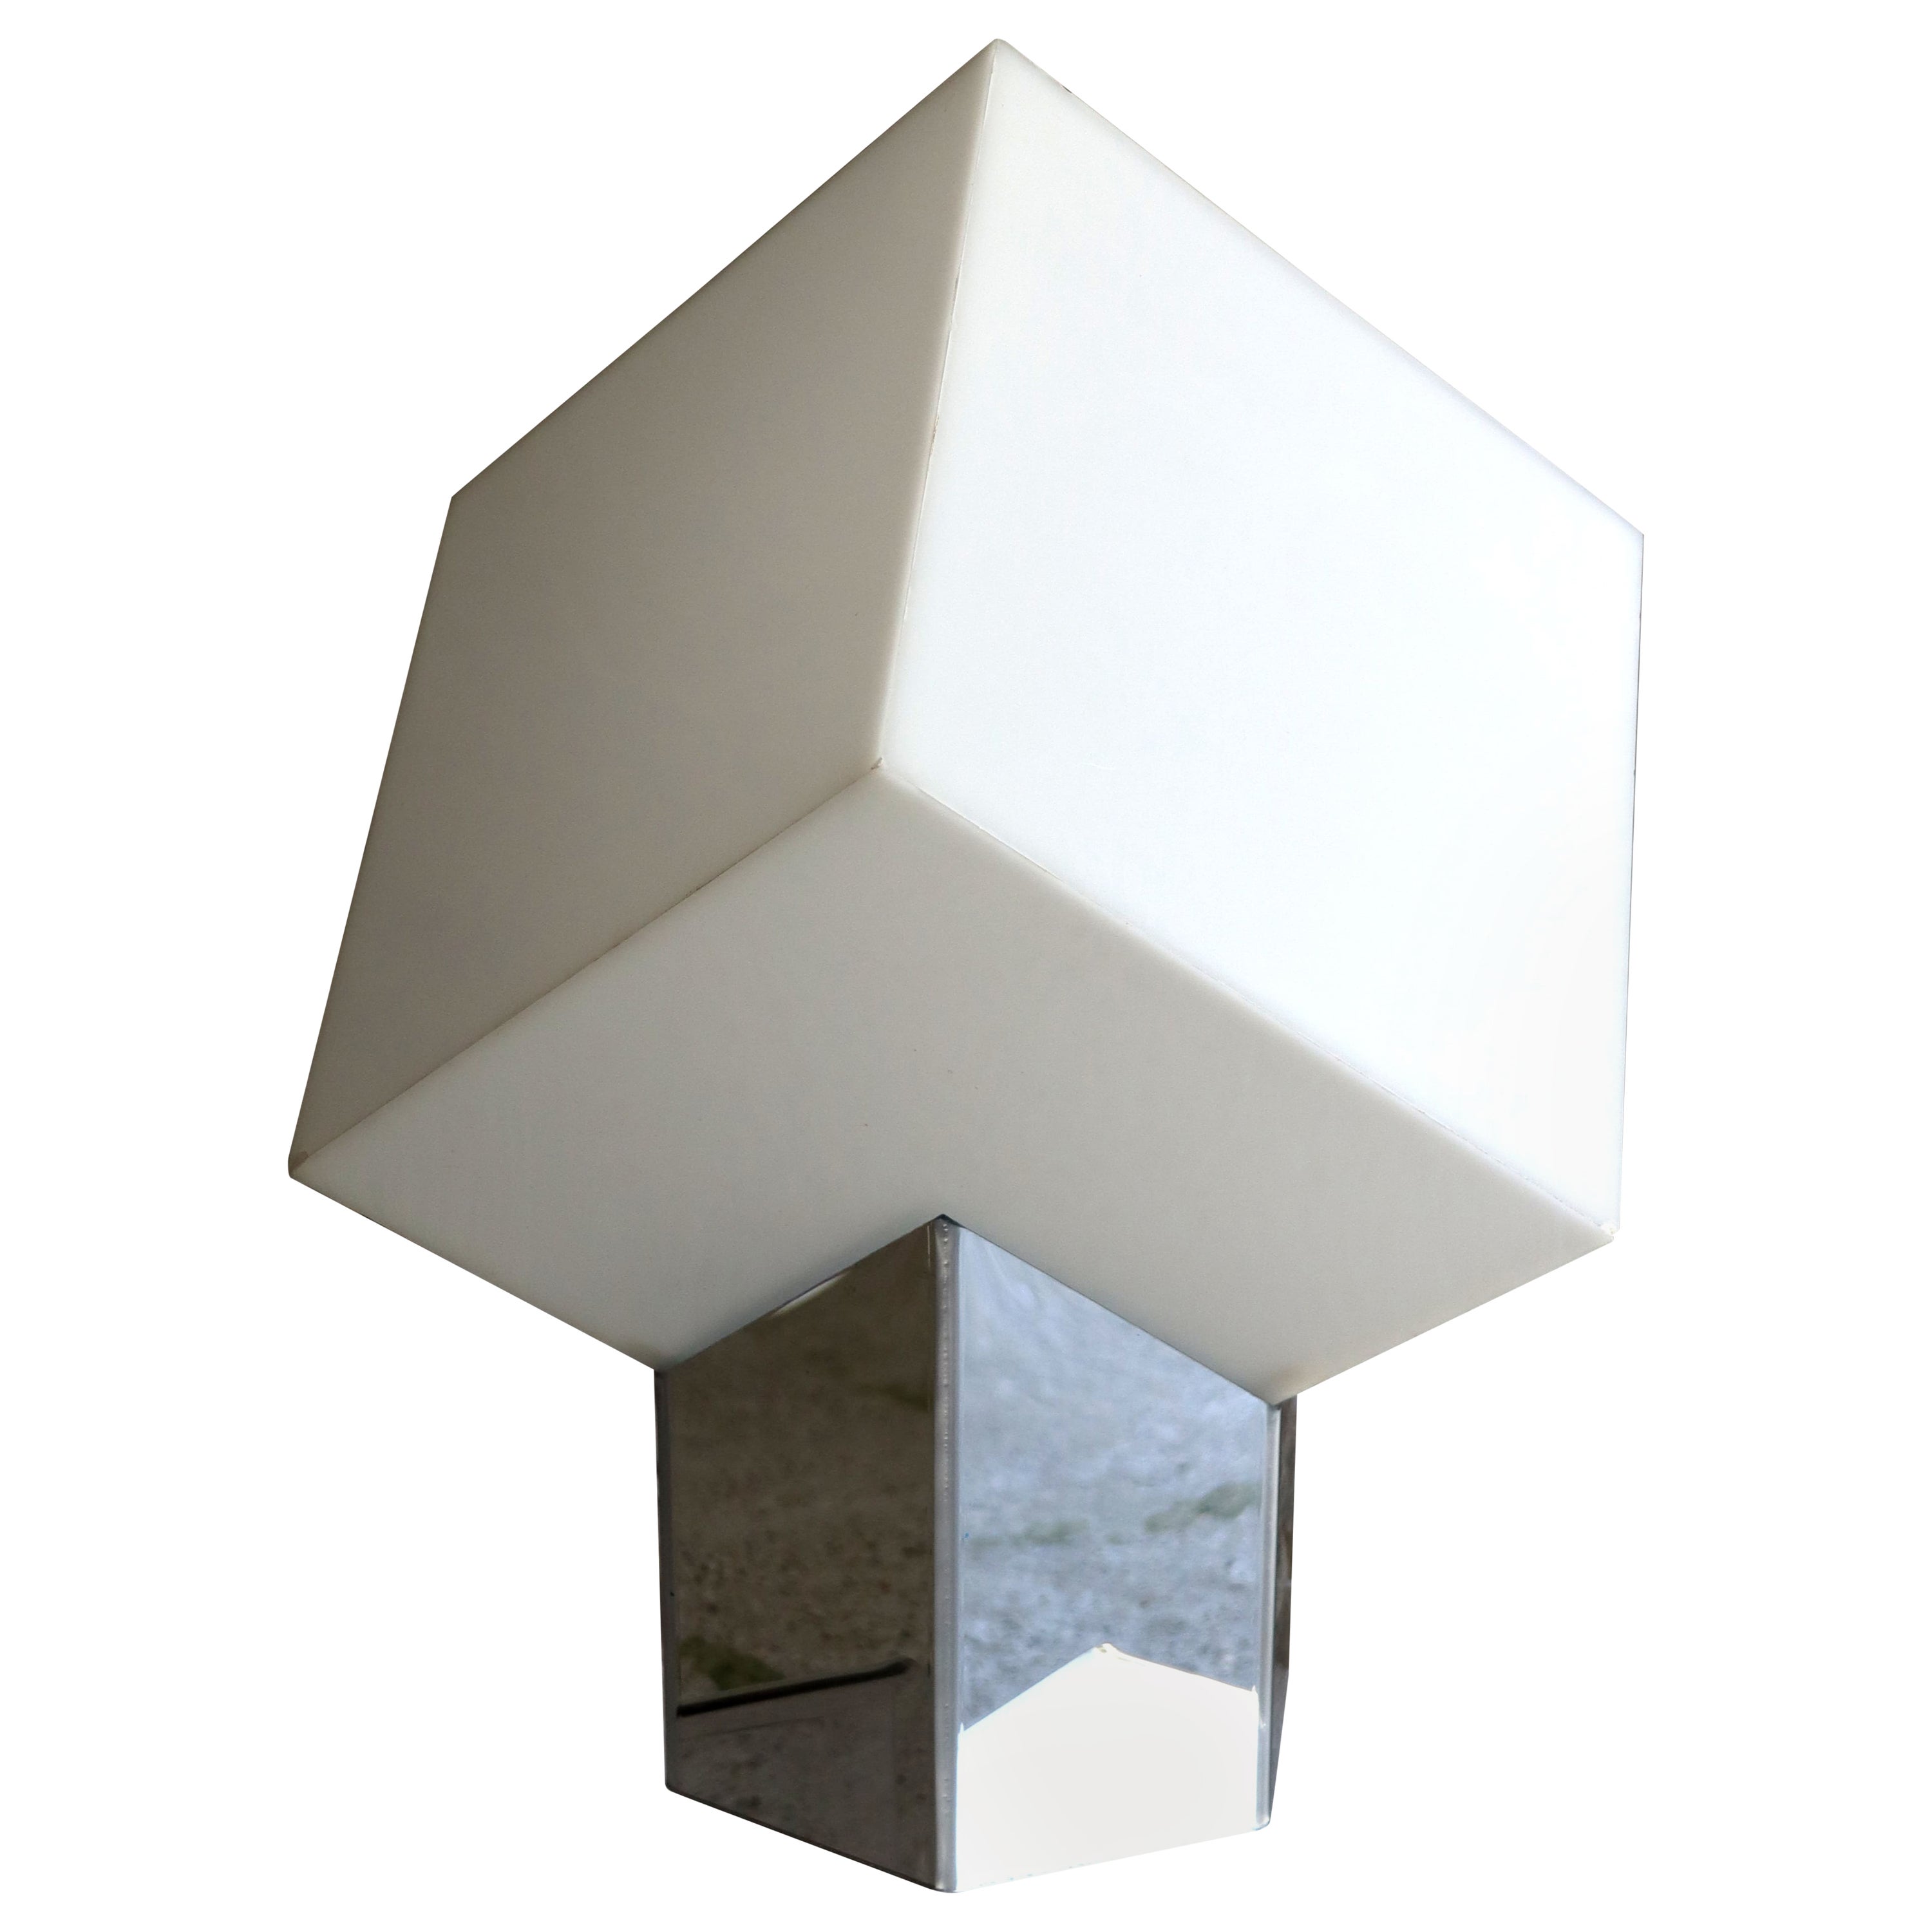 Raak – Cube Light – Paul Driessen – Dutch – 1970s